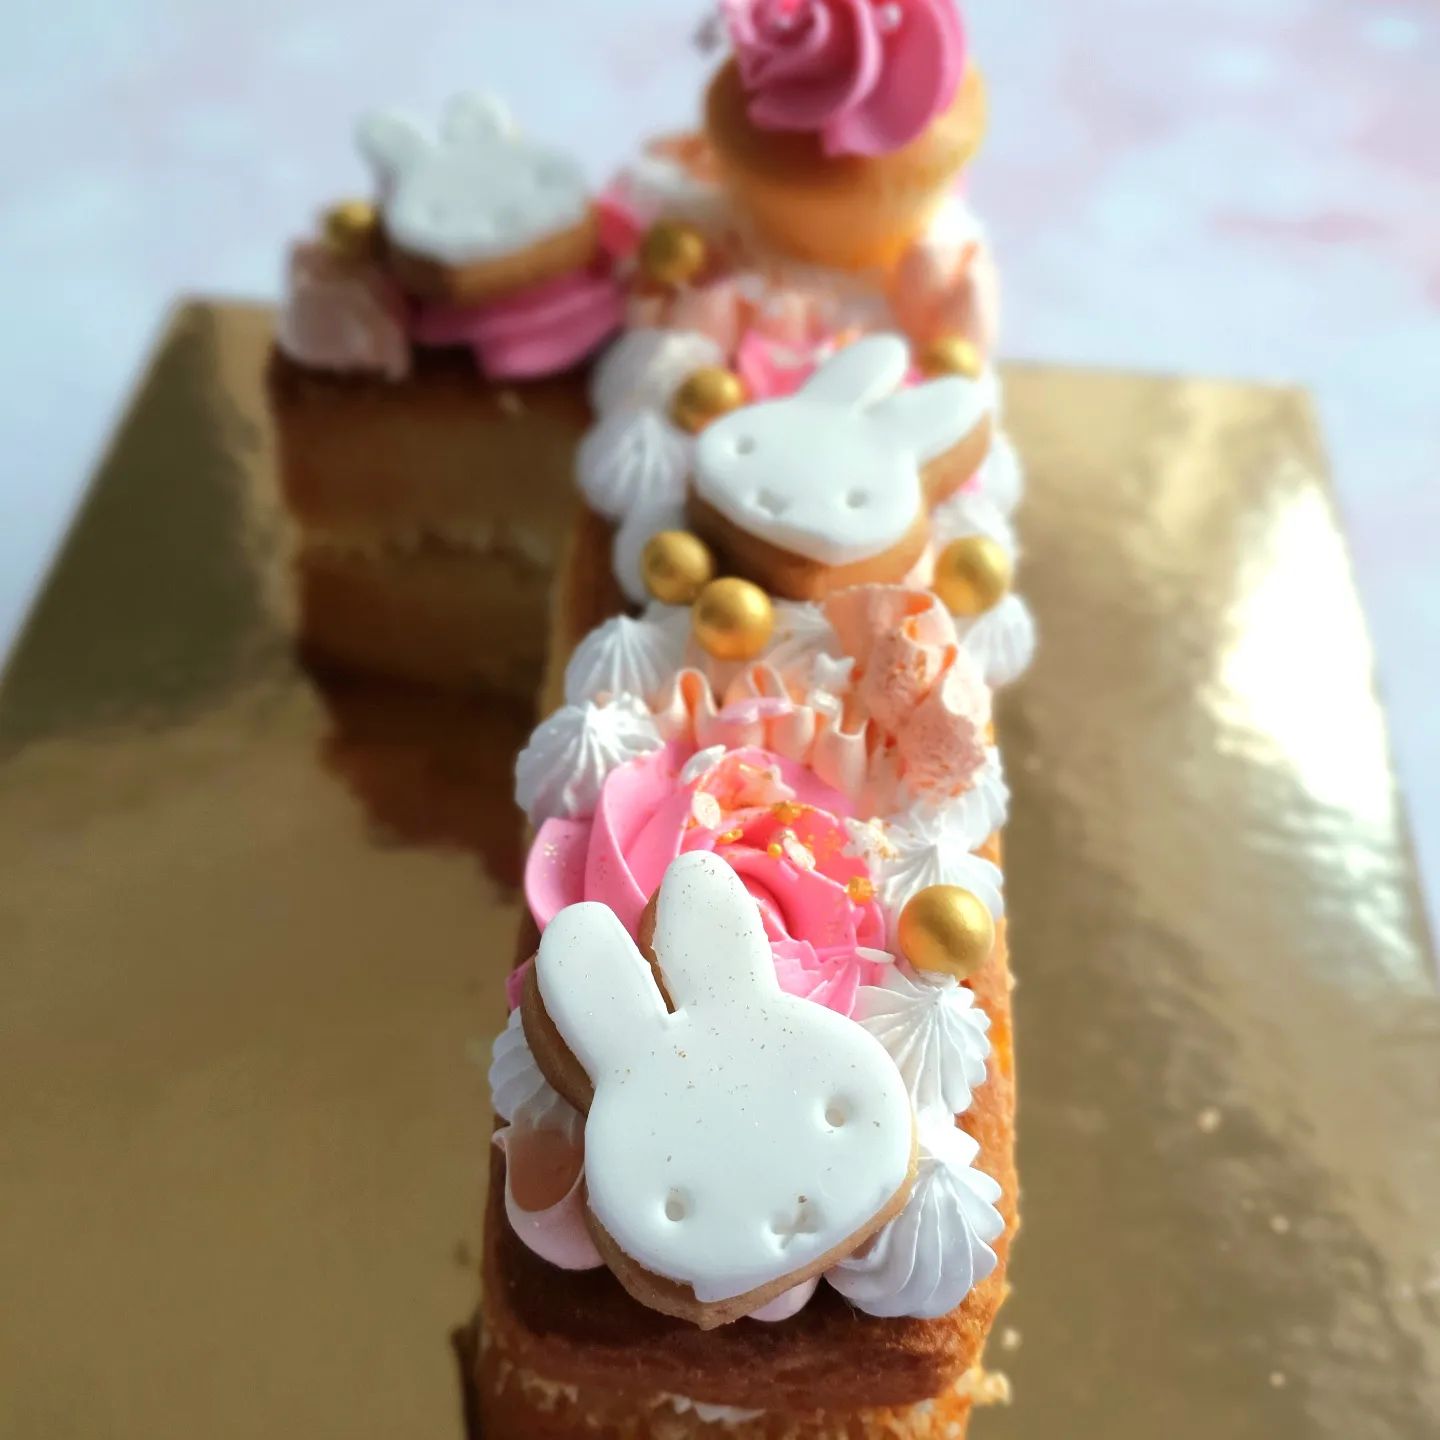 1 jaar https://www.juffrouwtaart.nl/product-categorie/taart-bestellen-winsum-groningen/ #cakecakecake #numbercake #buttercream #pink #pastels #cake #cakemaker #numbercakes #cakedecorating #instacake #instacakes #baker #bake #girlscake #rainbow #buttercreamcake #instabake #cakesdaily #caketrends #cakeinspo #cakeinspiration #pastel #pastelcake #pinkcake #birthdaycake #pastelaesthetic #cakephotography #cutecake #cijfertaart #verjaardagstaart